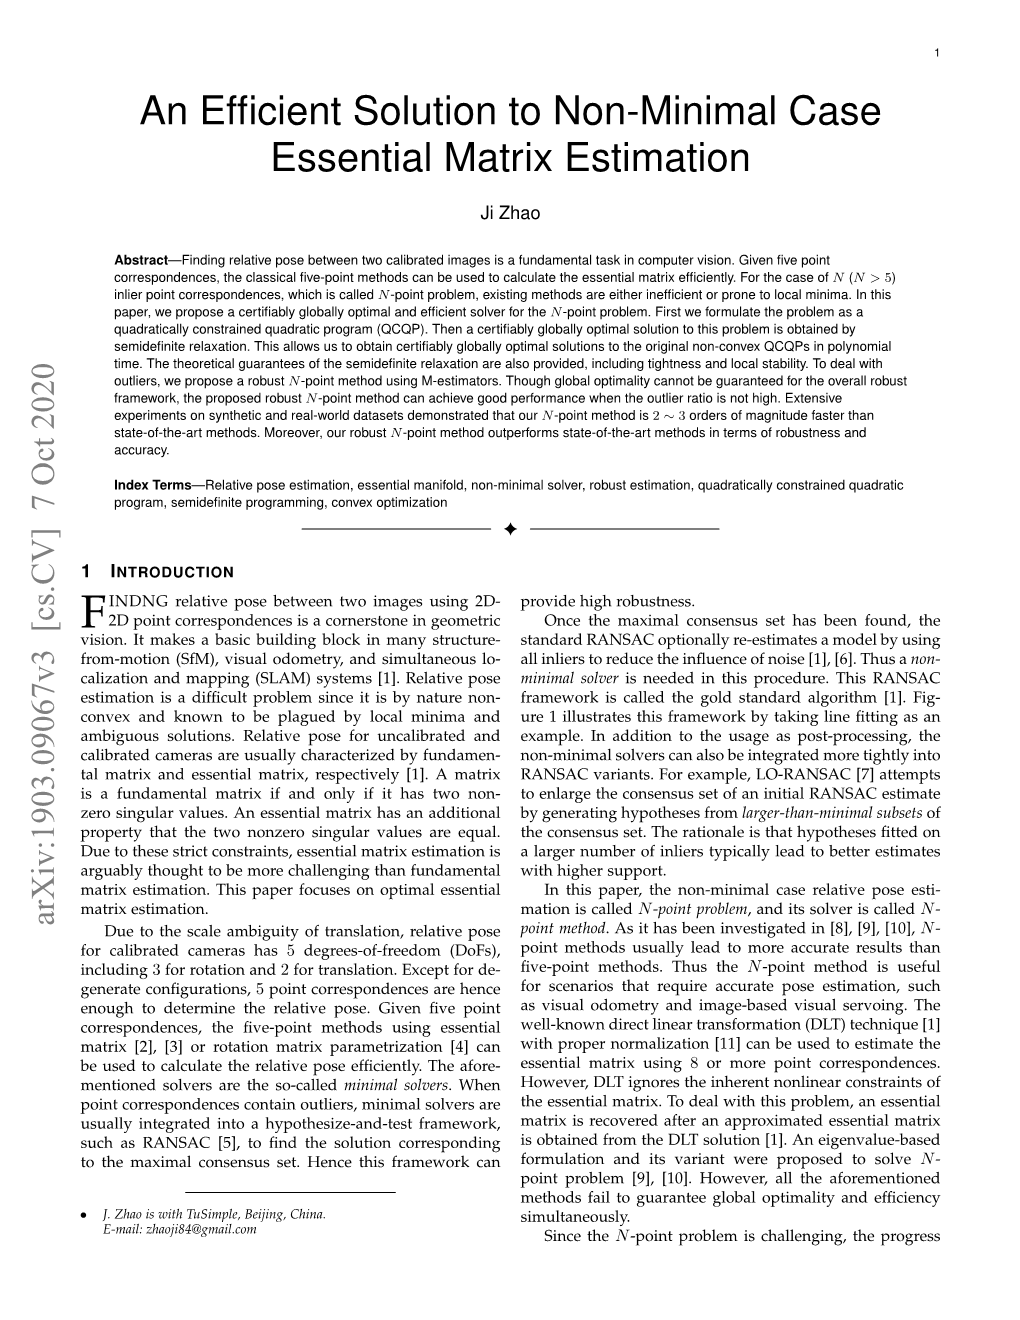 An Efficient Solution to Non-Minimal Case Essential Matrix Estimation